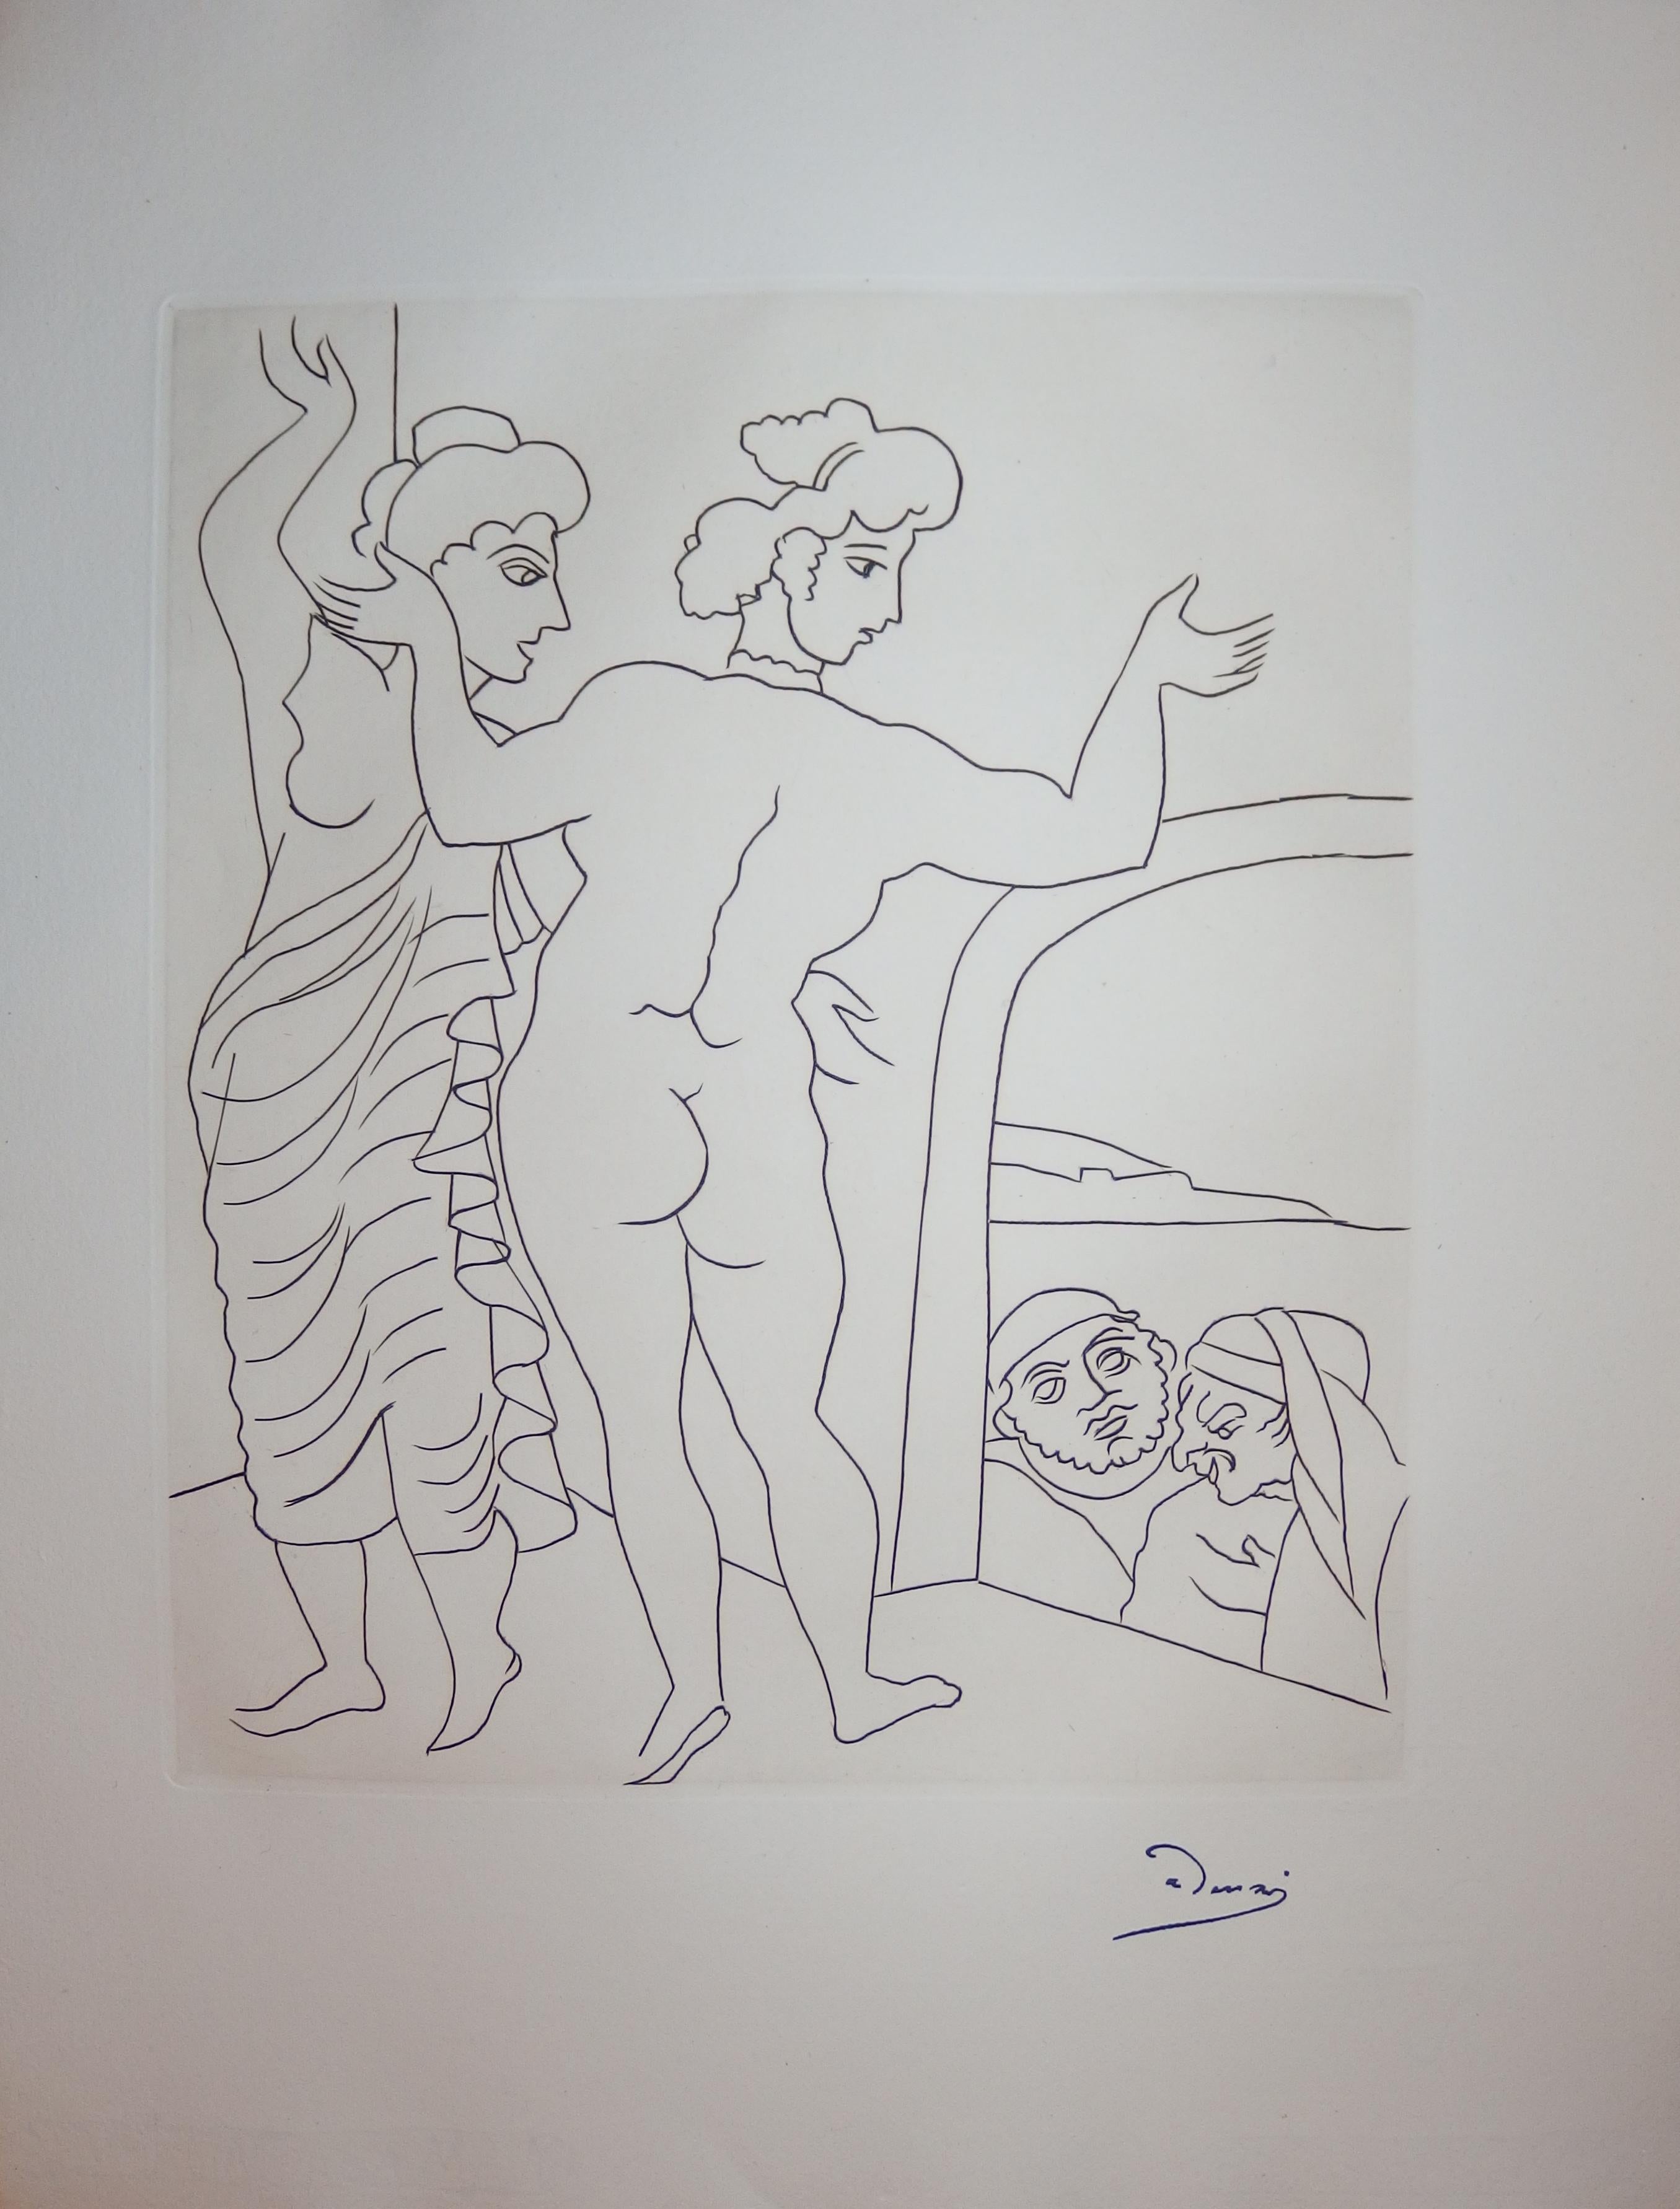 Two Nude Women Surprised - Original etching - 1951